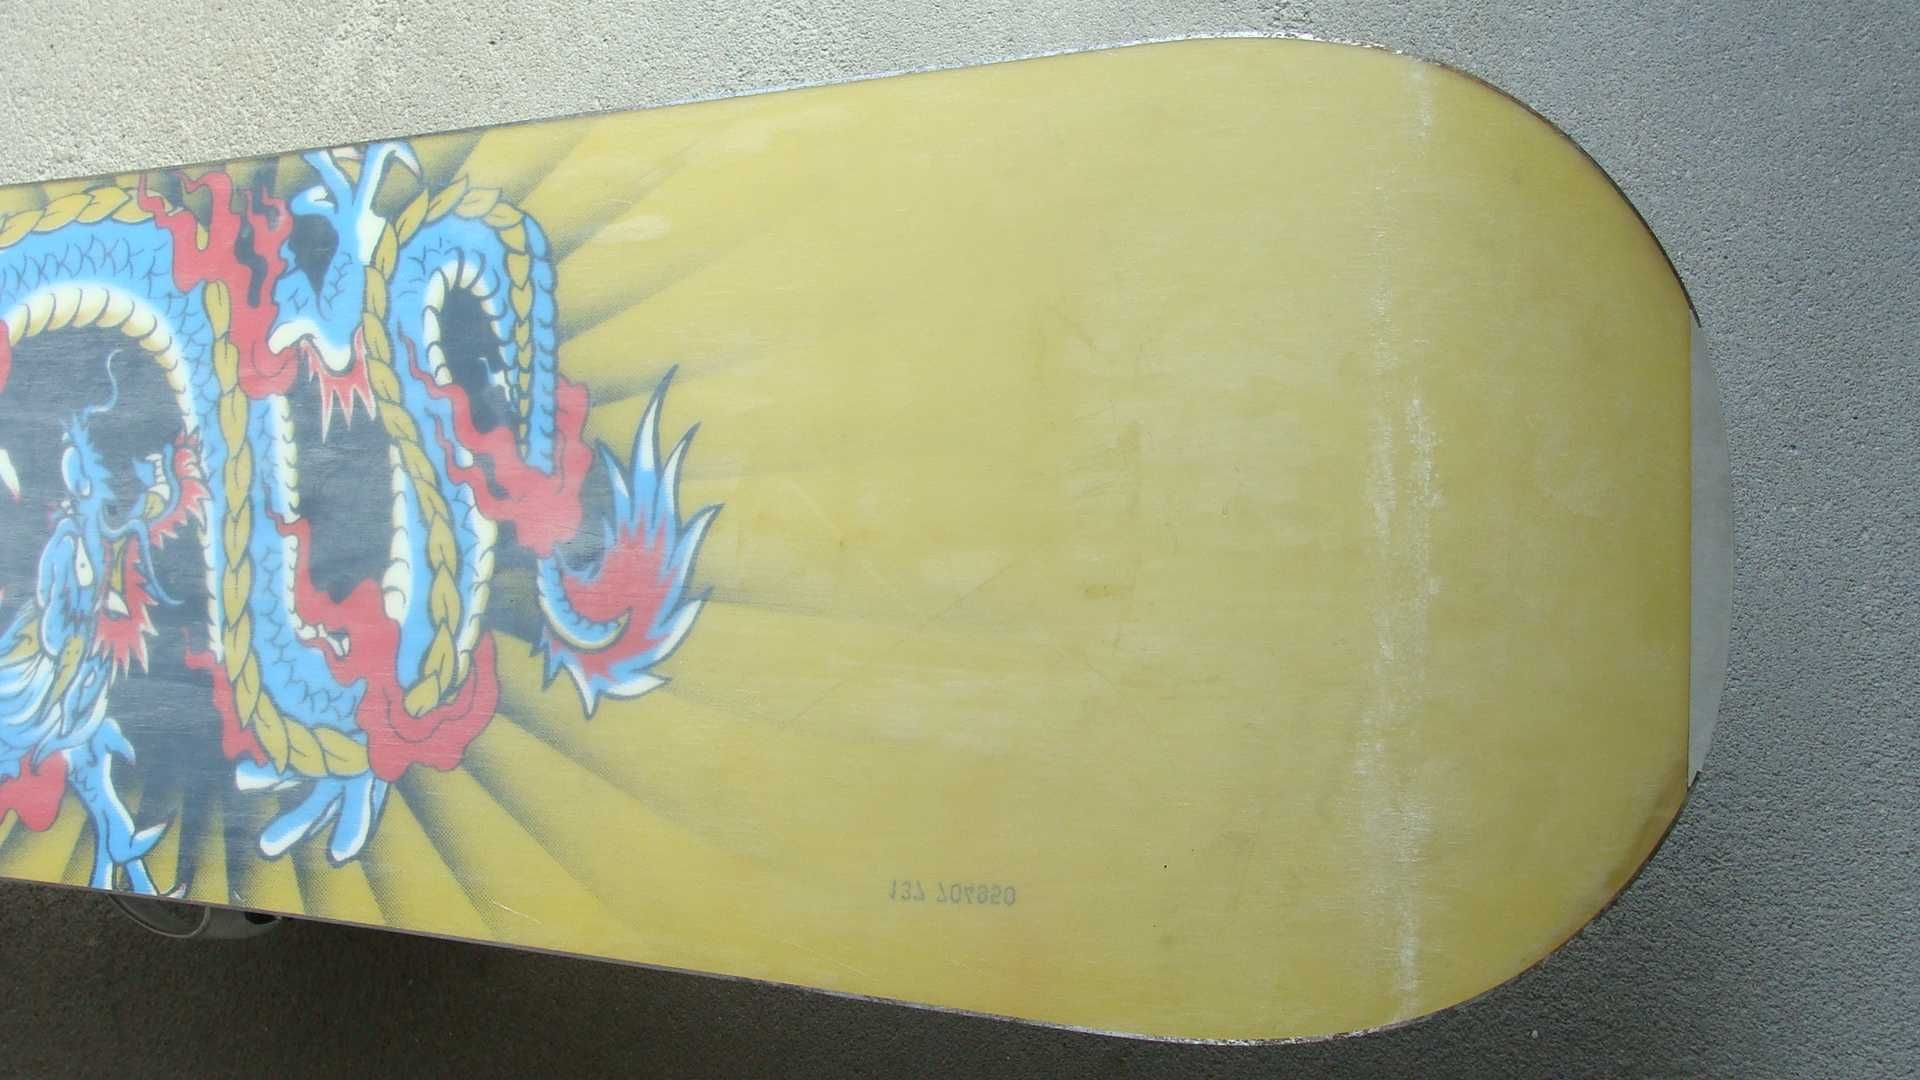 deska snowboardowa 154 cm BURTON Rippey 54 (USA)+ wiązania SNOWPRO M-L